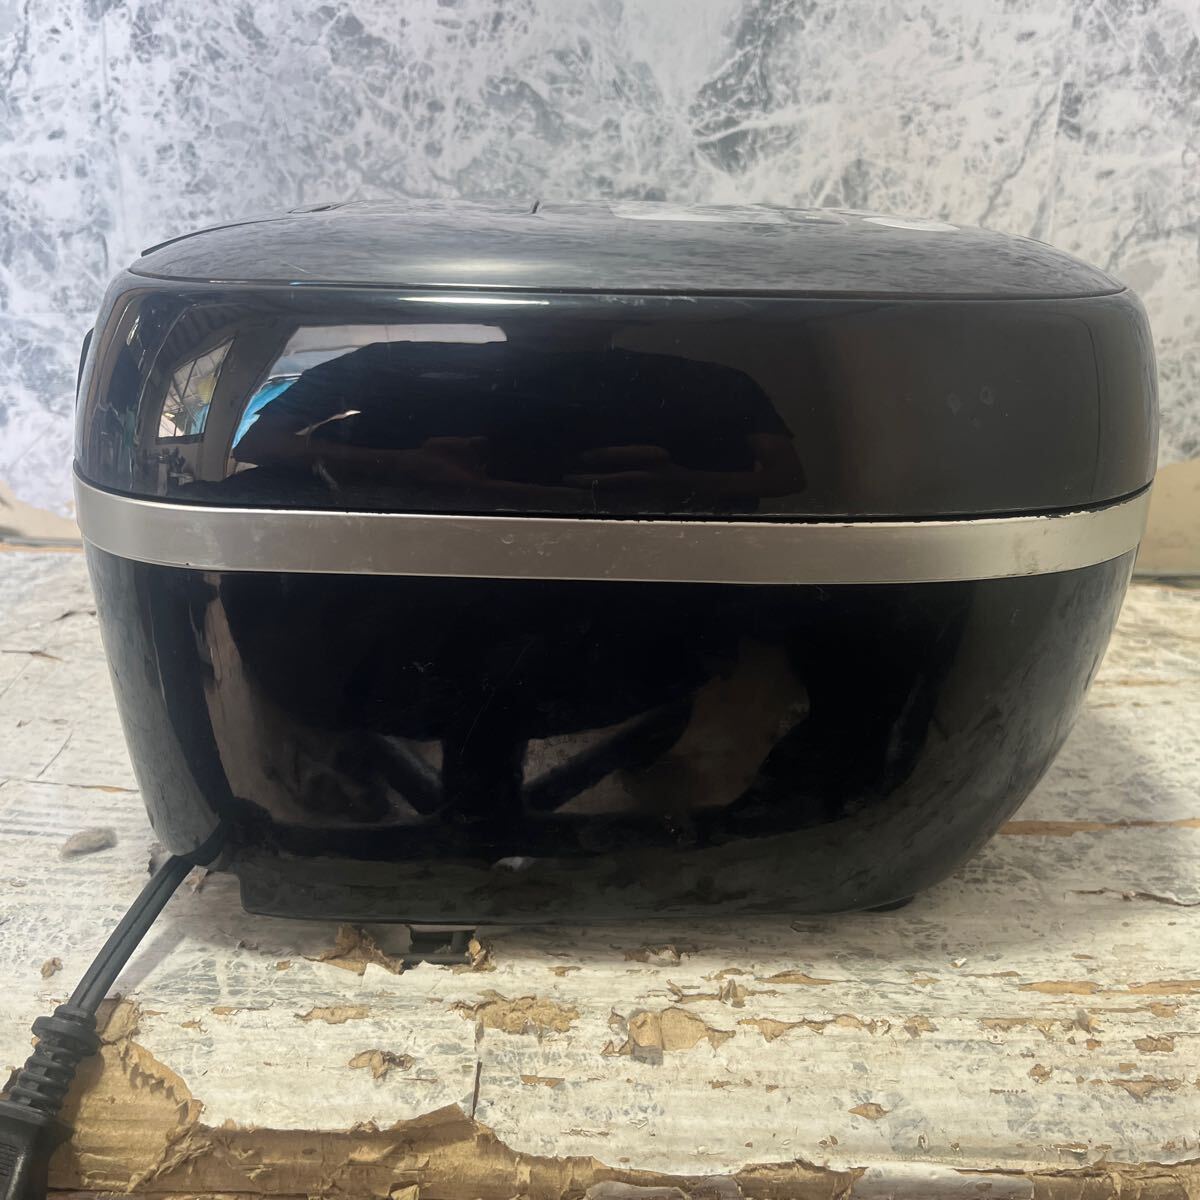 TIGER Tiger pressure IH pressure IH jar rice cooker JPD-A060 2018 year made 8253